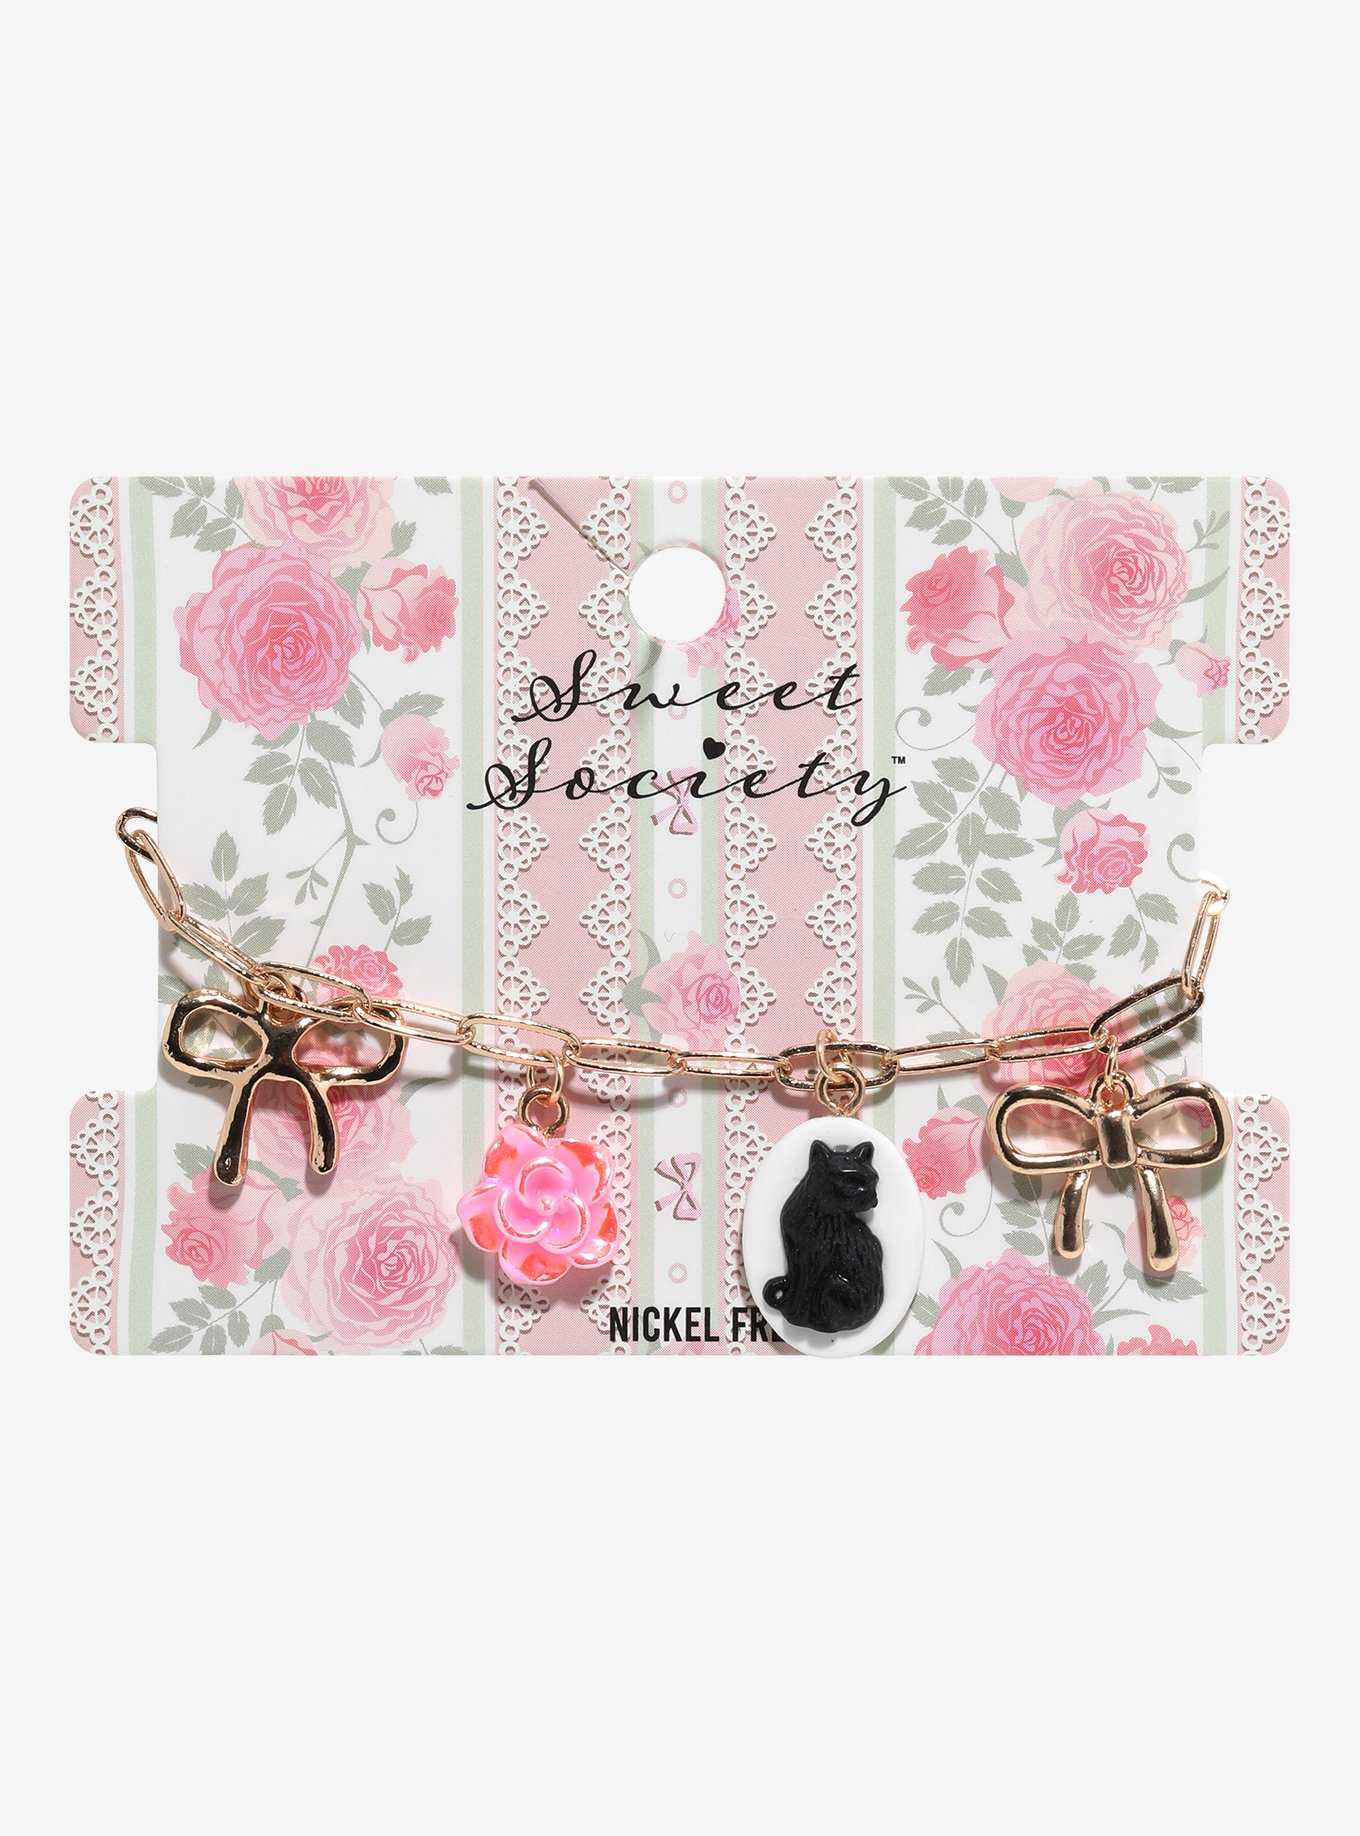 Sweet Society Bow Flower Charm Bracelet, , hi-res